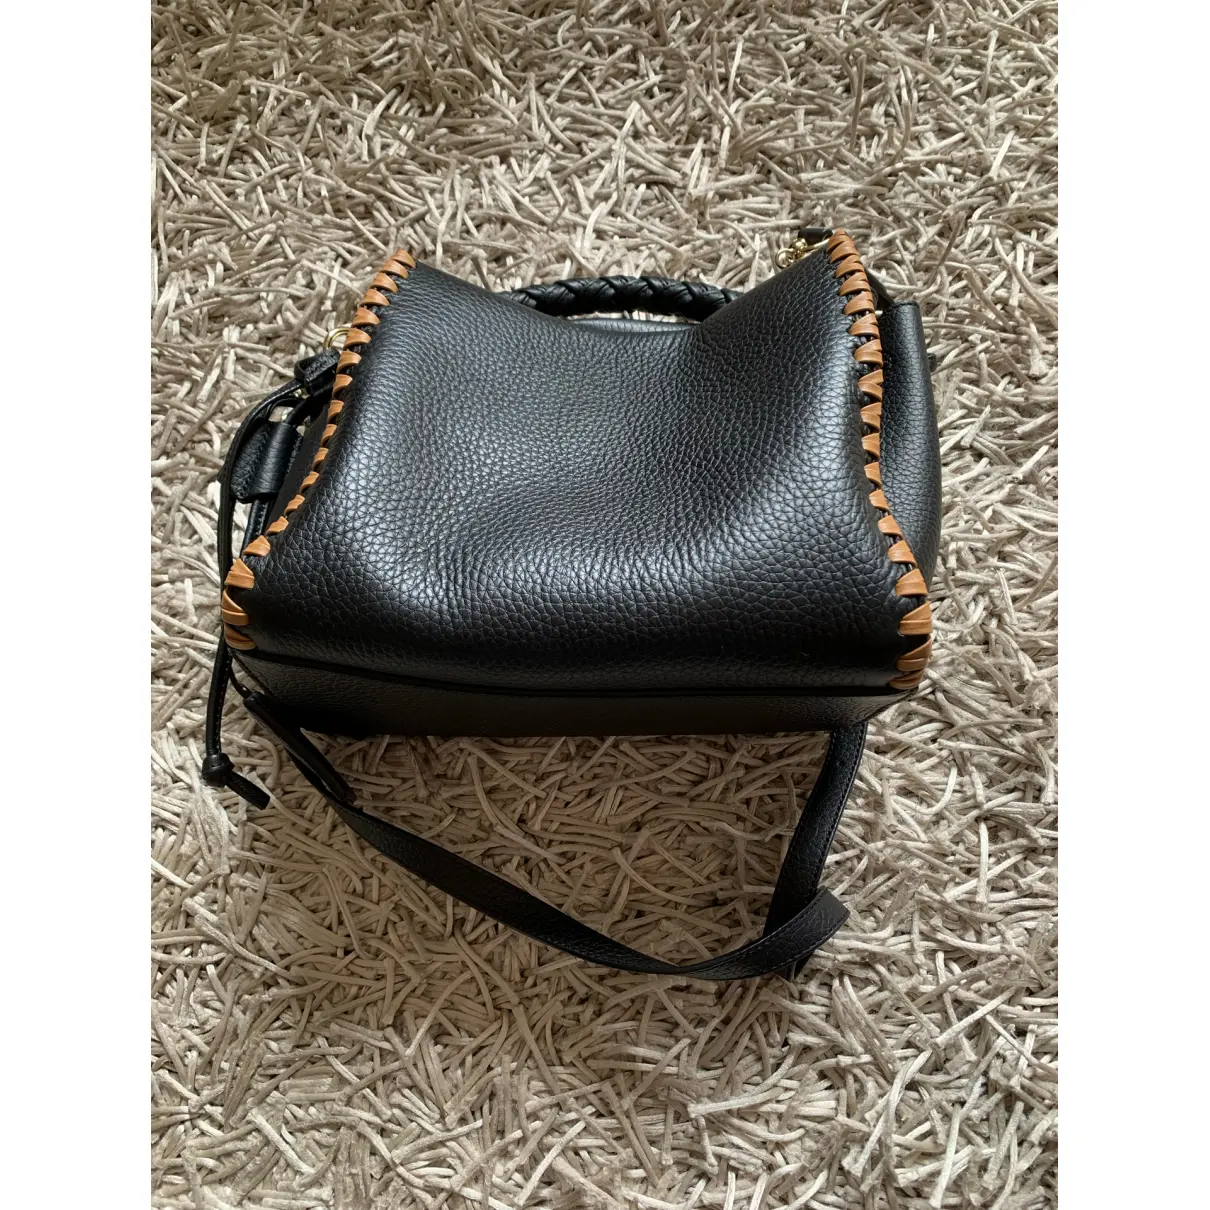 Buy Mulberry Iris leather handbag online